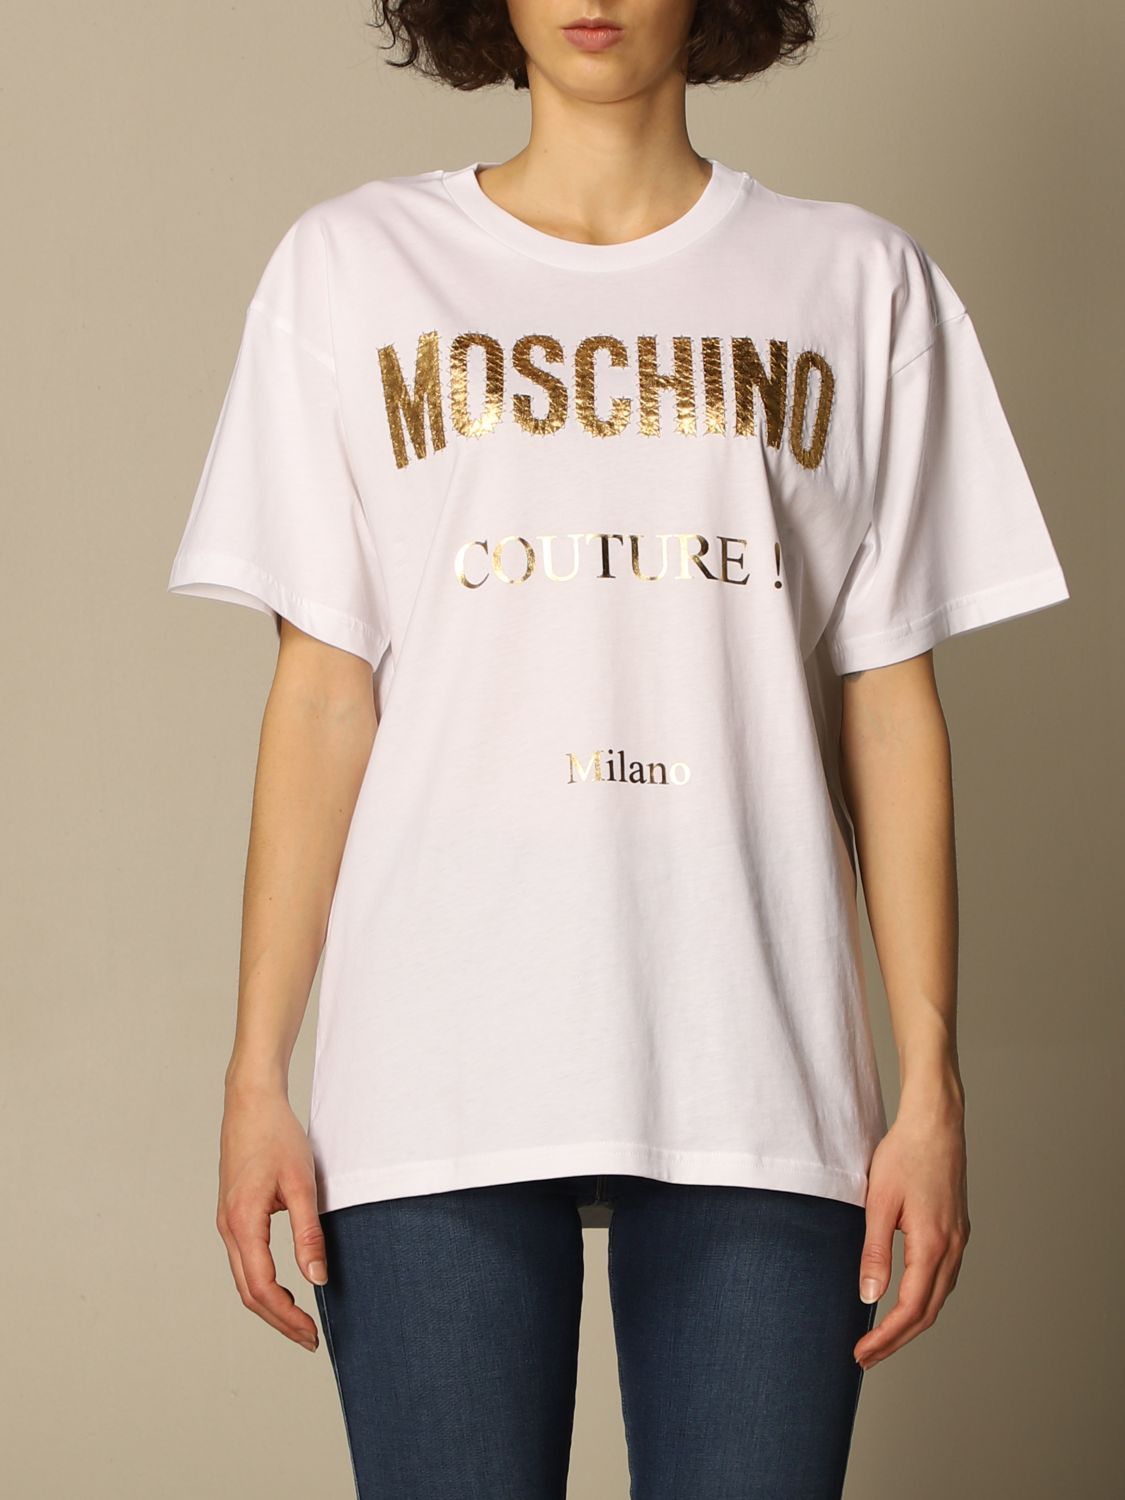 T-Shirt Moschino Couture 0713 0440 